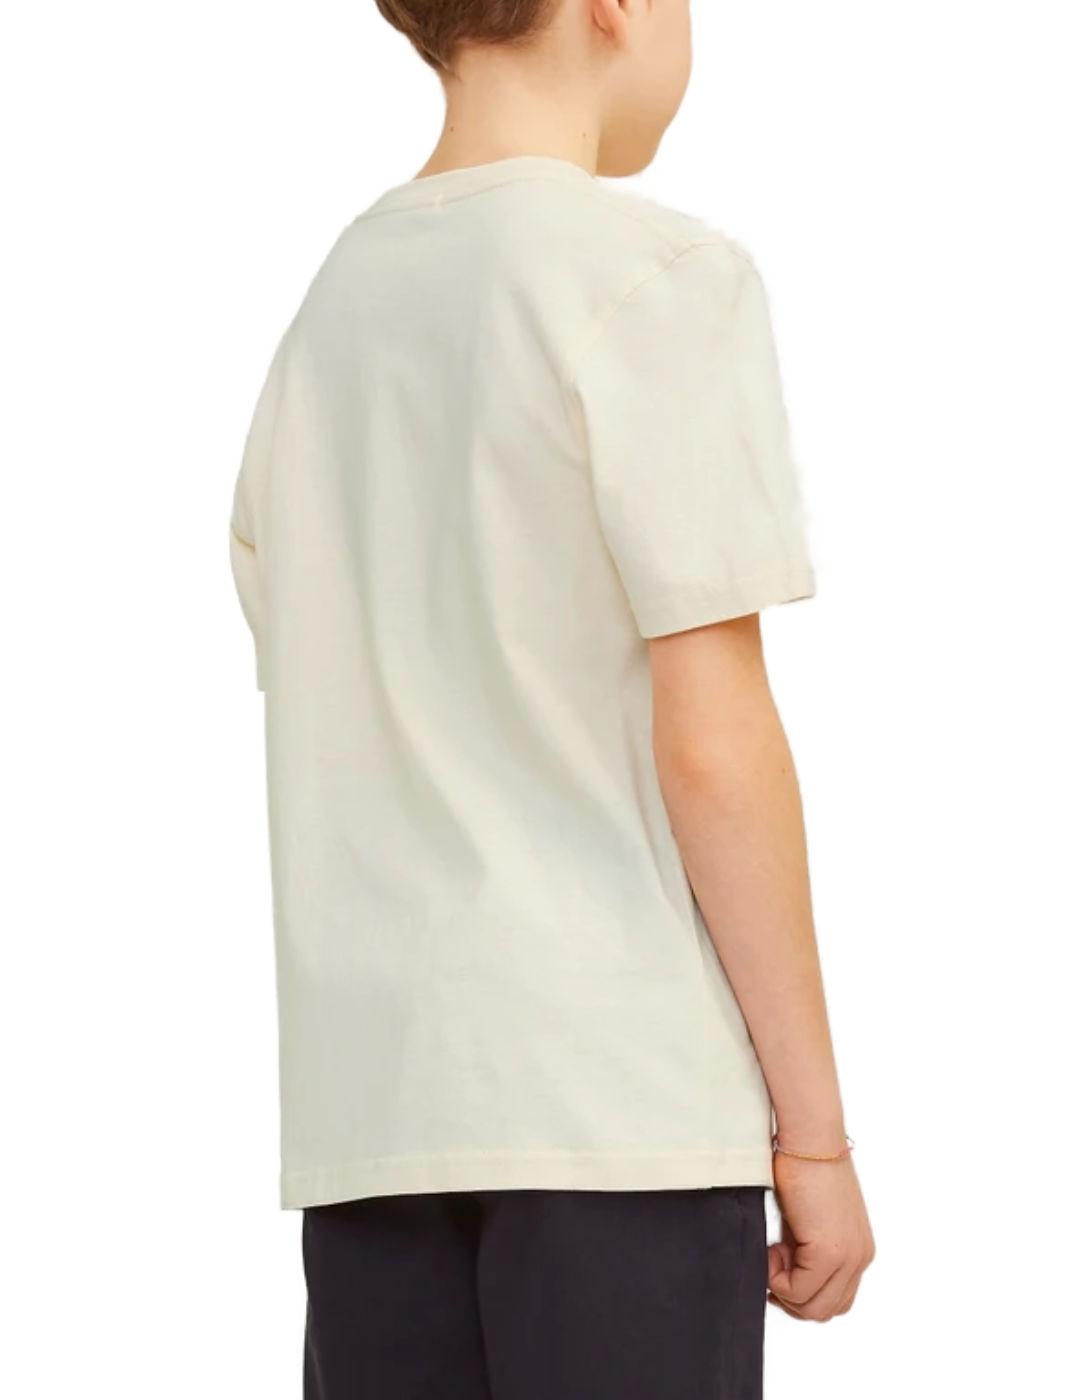 Camiseta Jack&Jones Junior Aruba beige manga corta niño